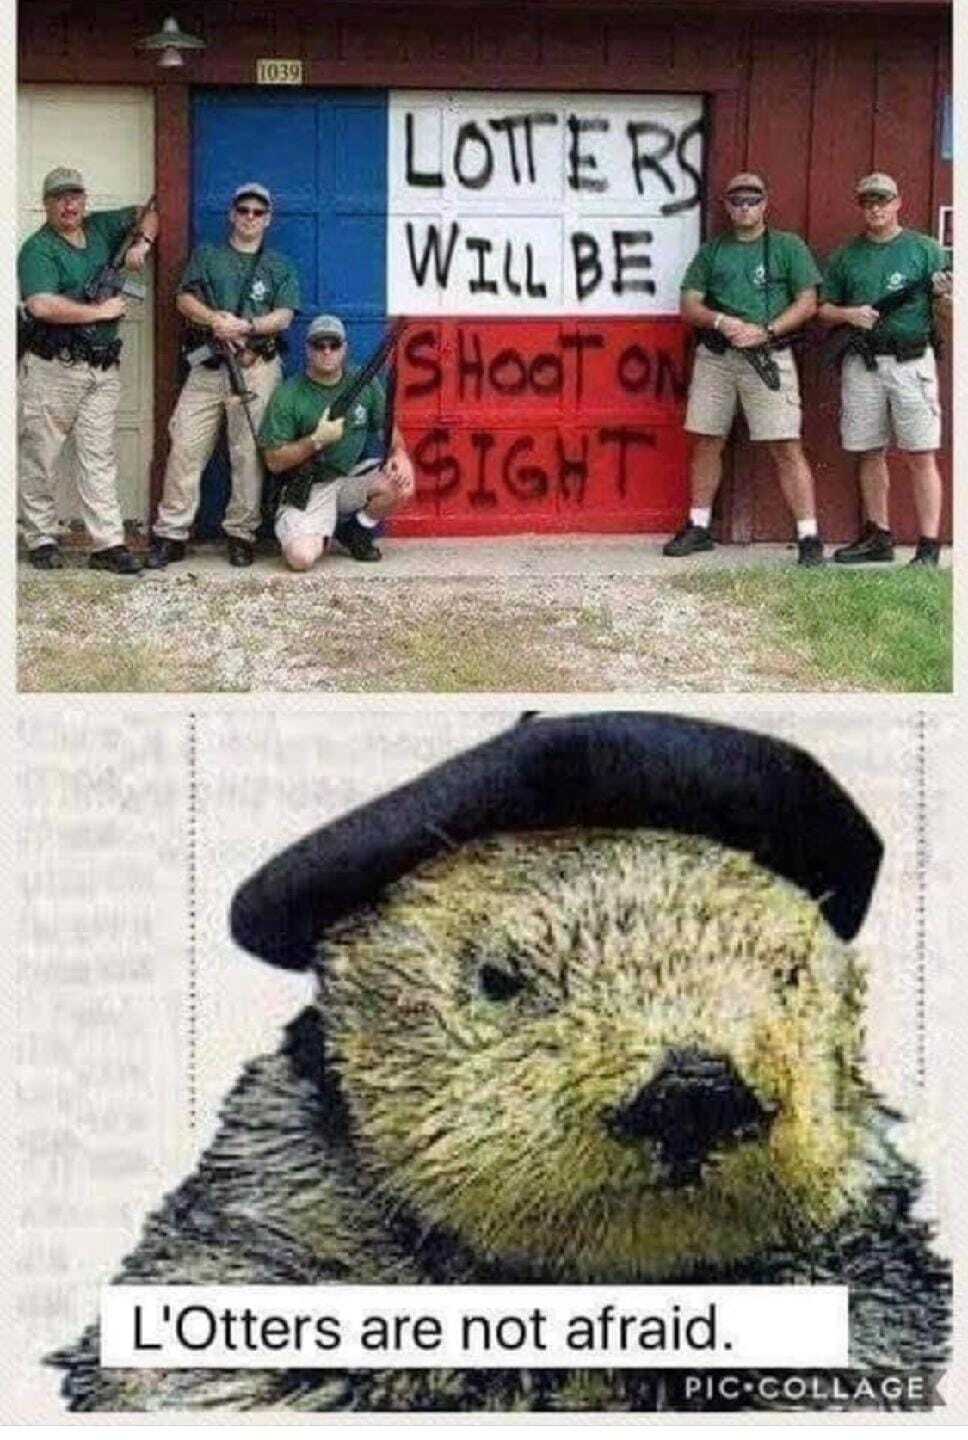 never trust l'otters